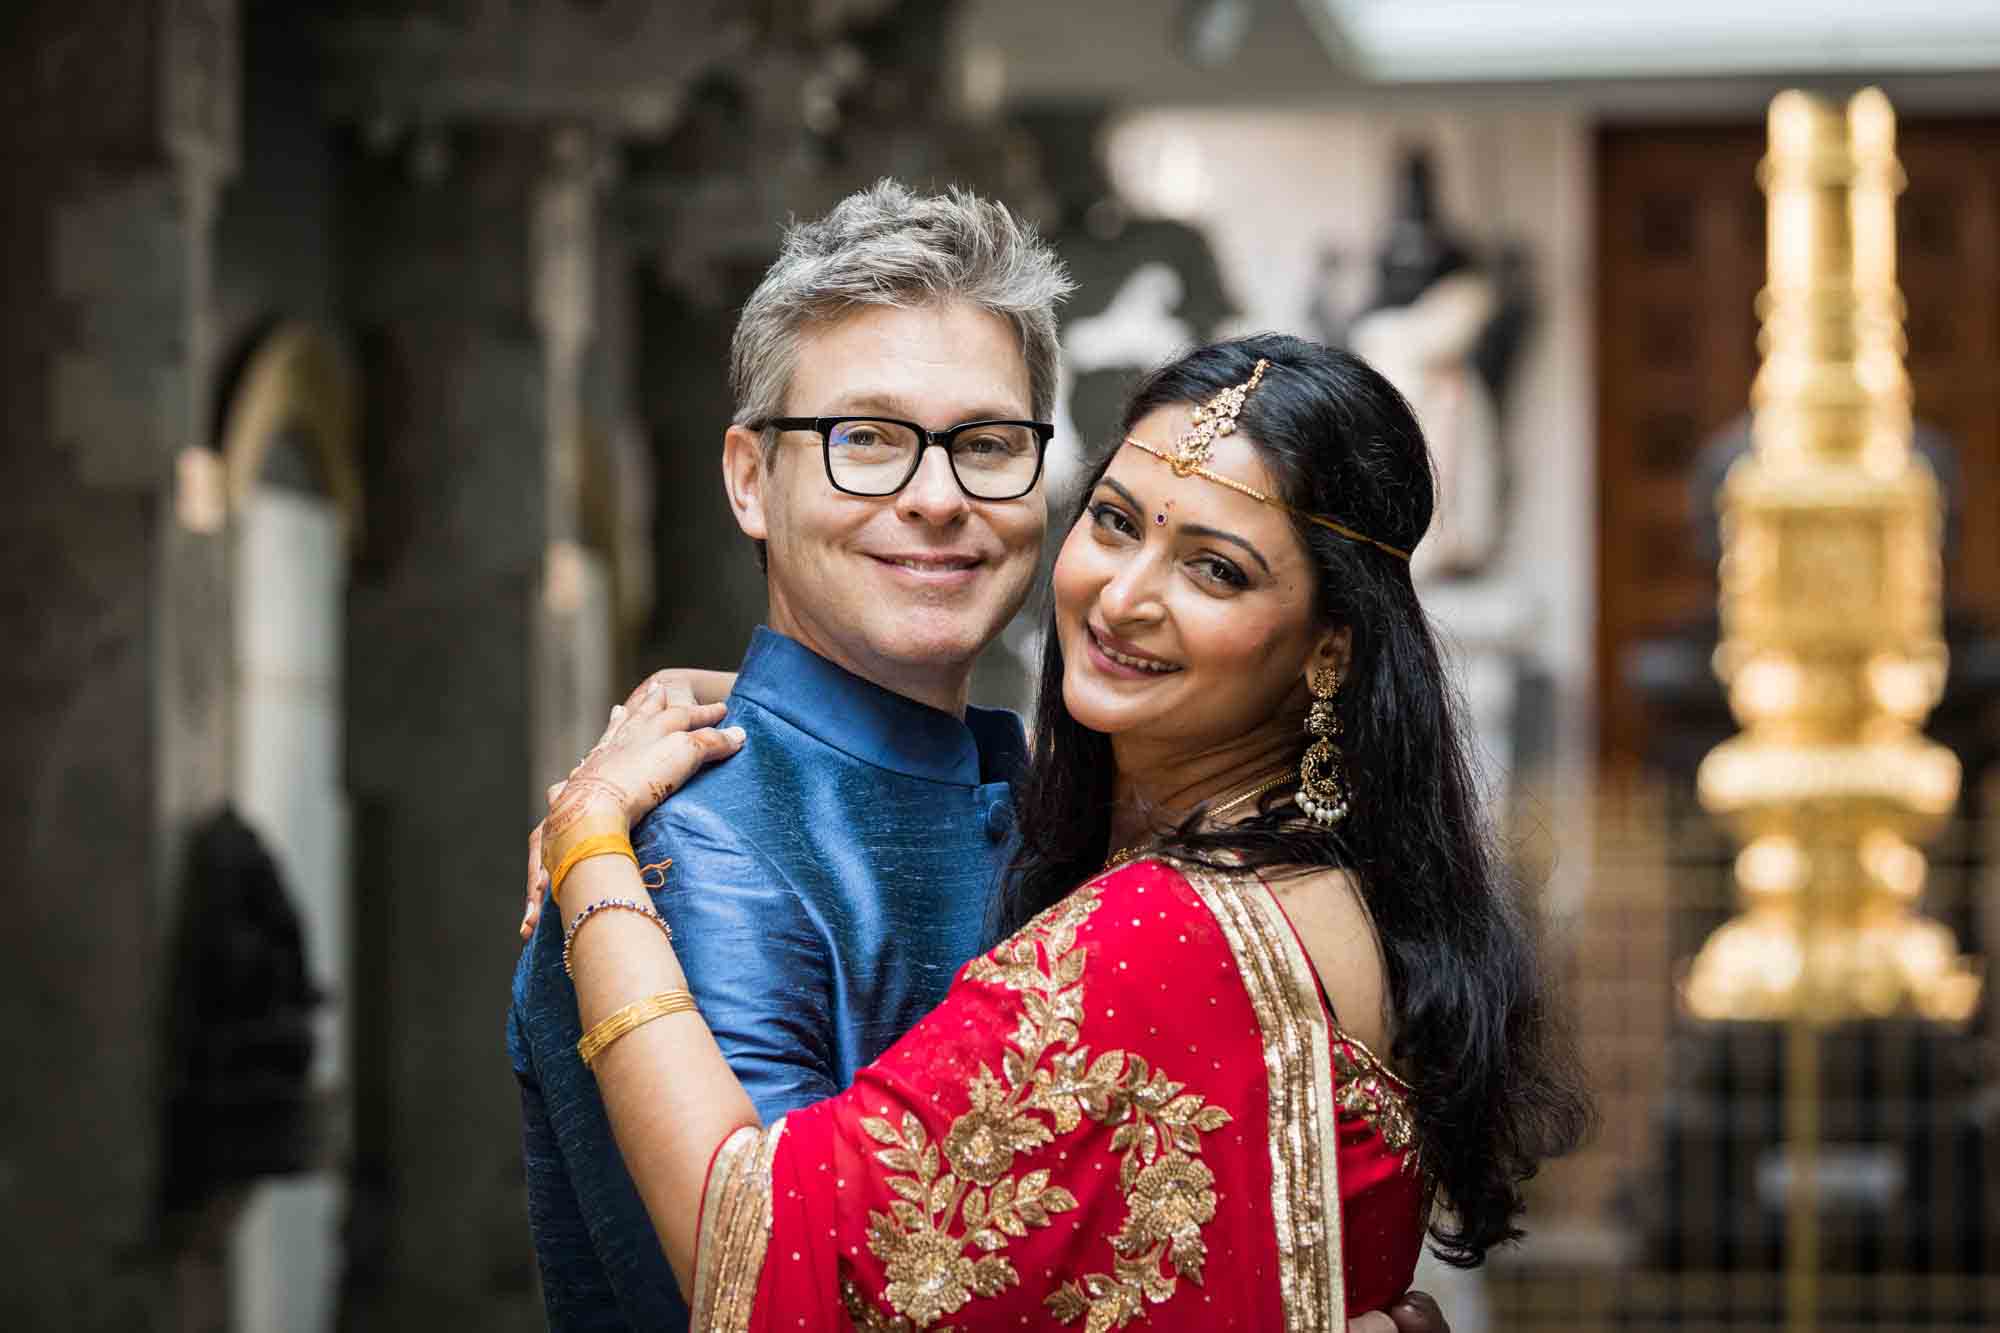 Hindu Temple Society of North America wedding photos of groom in blue shirt hugging bride in red sari